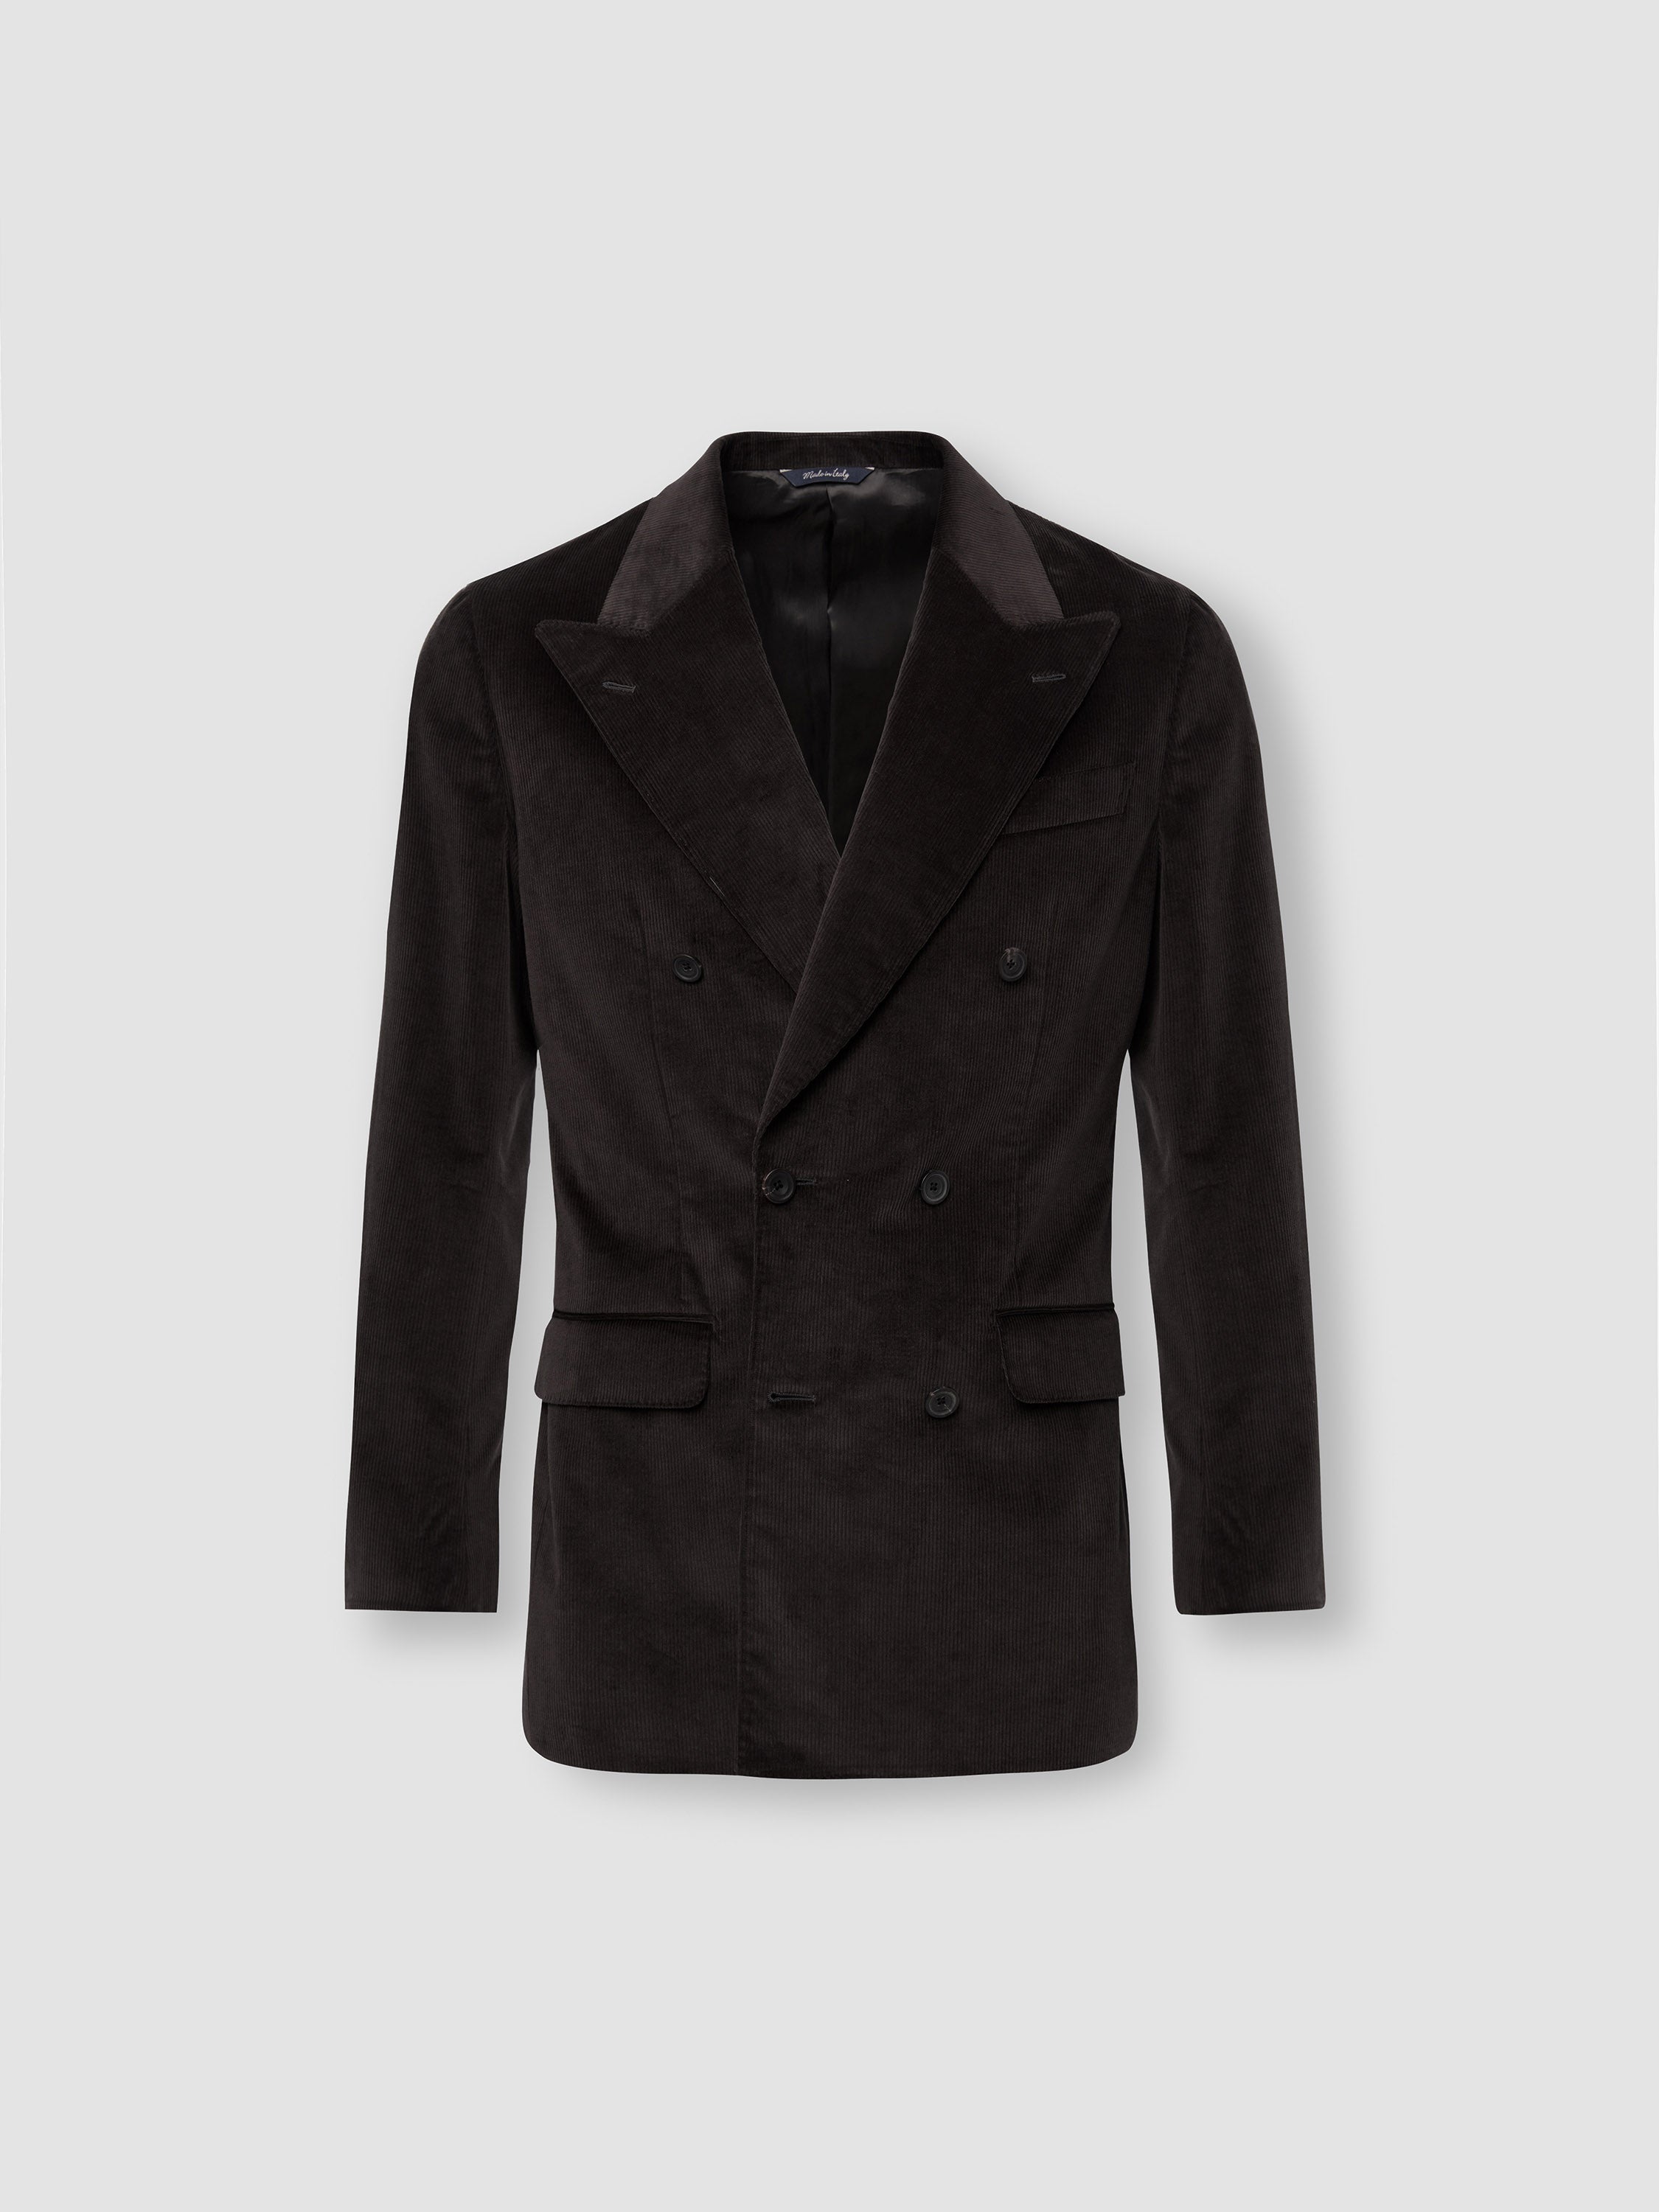 Corduroy Double Breasted Peak Lapel Suit Dark Brown Jacket Product Image